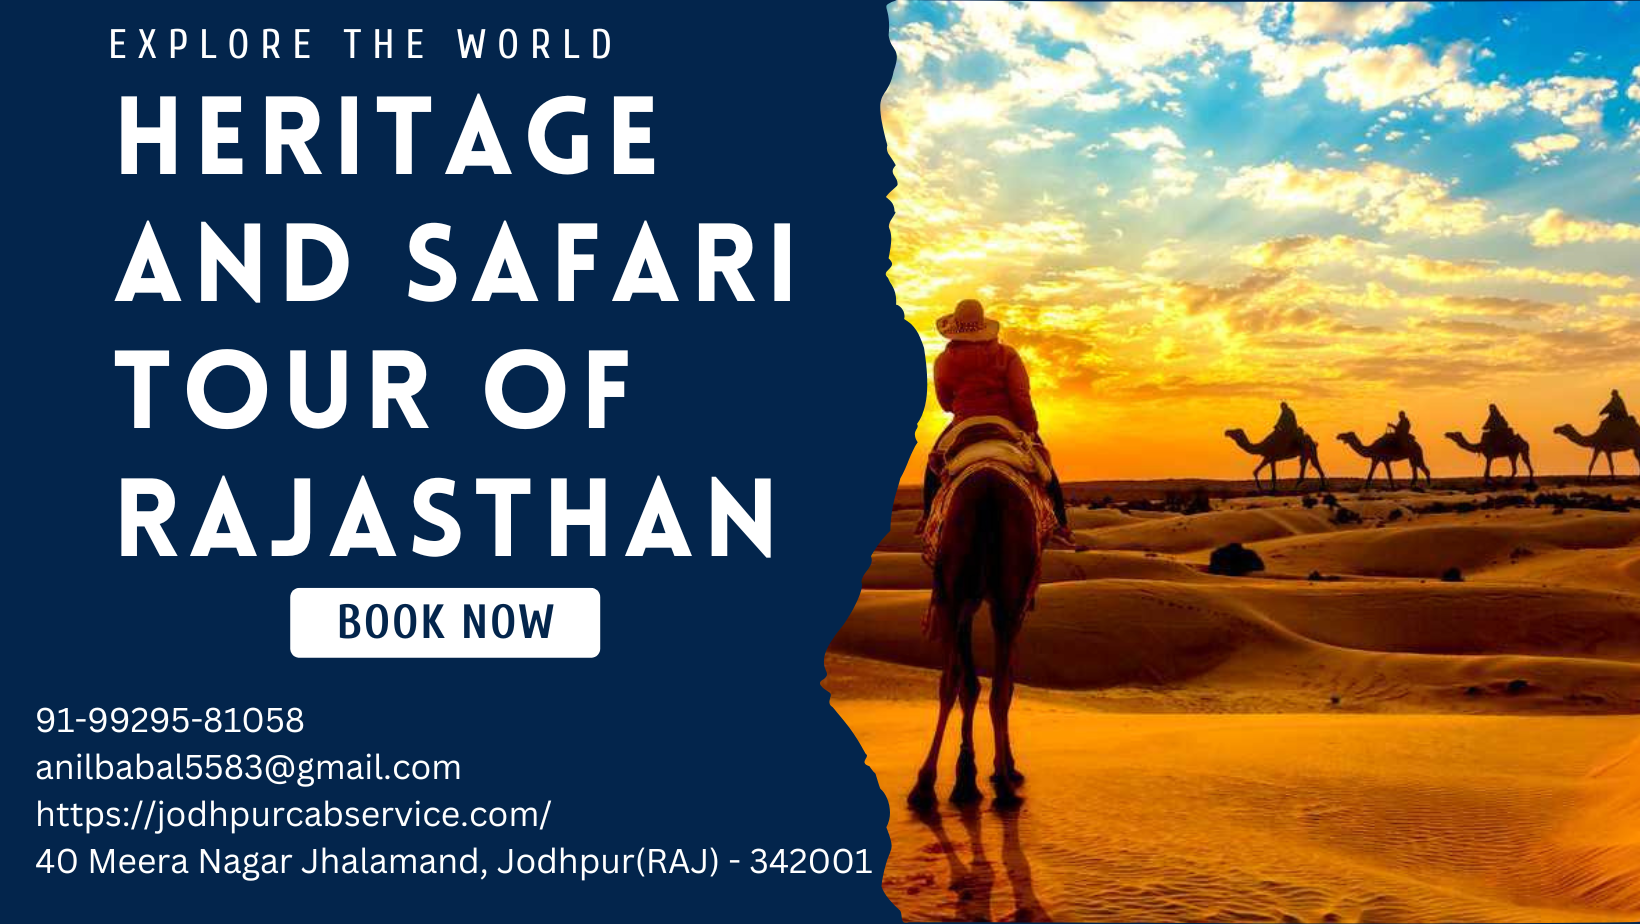 HERITAGE AND SAFARI TOUR OF RAJASTHAN